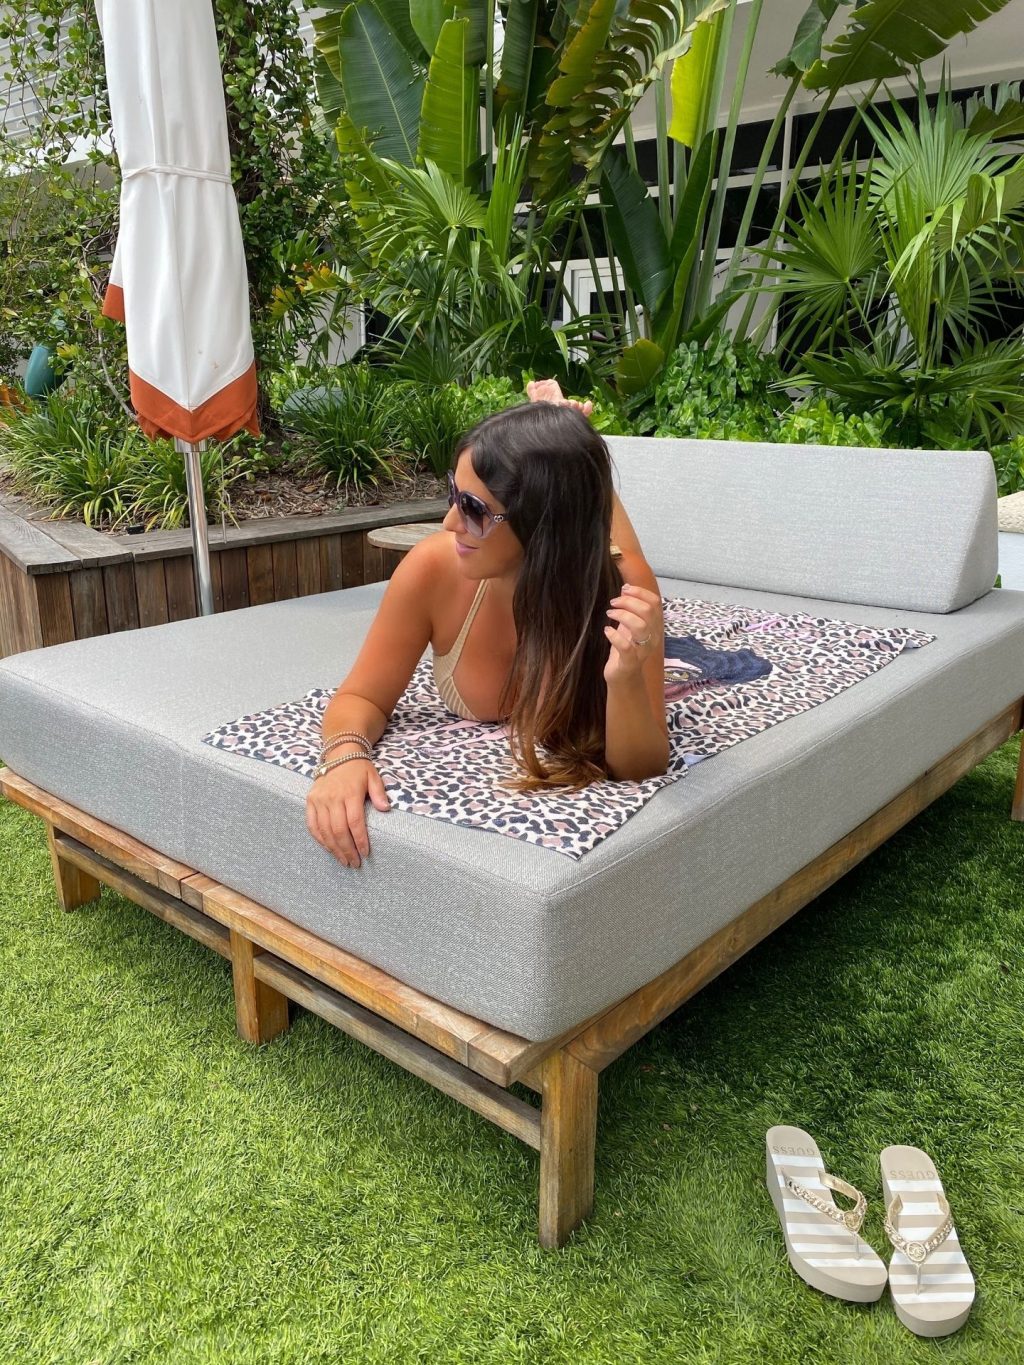 Claudia Romani Poses at The Ritz Carlton Hotel in Miami Beach (12 Photos)